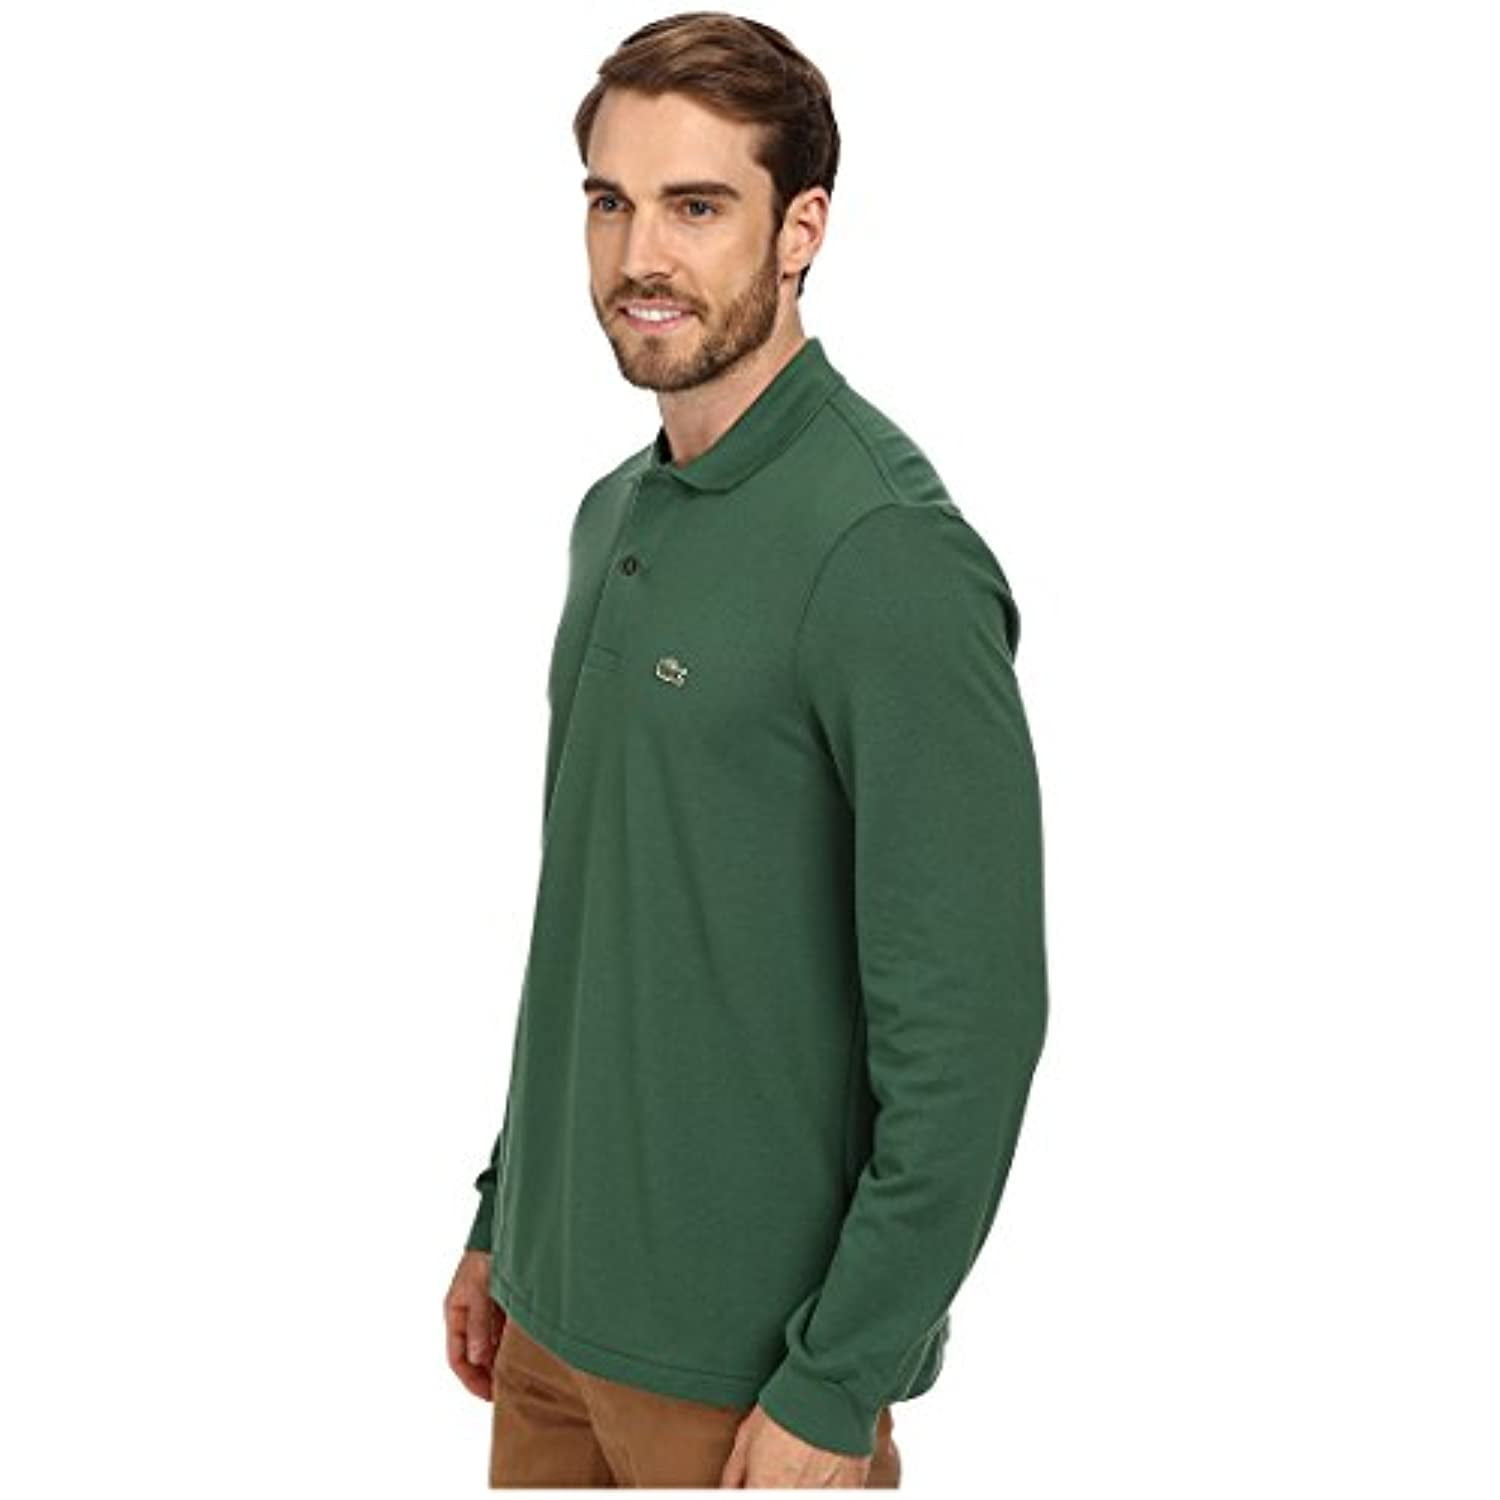 Lacoste mens Classic Long Sleeve Polo Shirt, Green, 6 US - Walmart.com